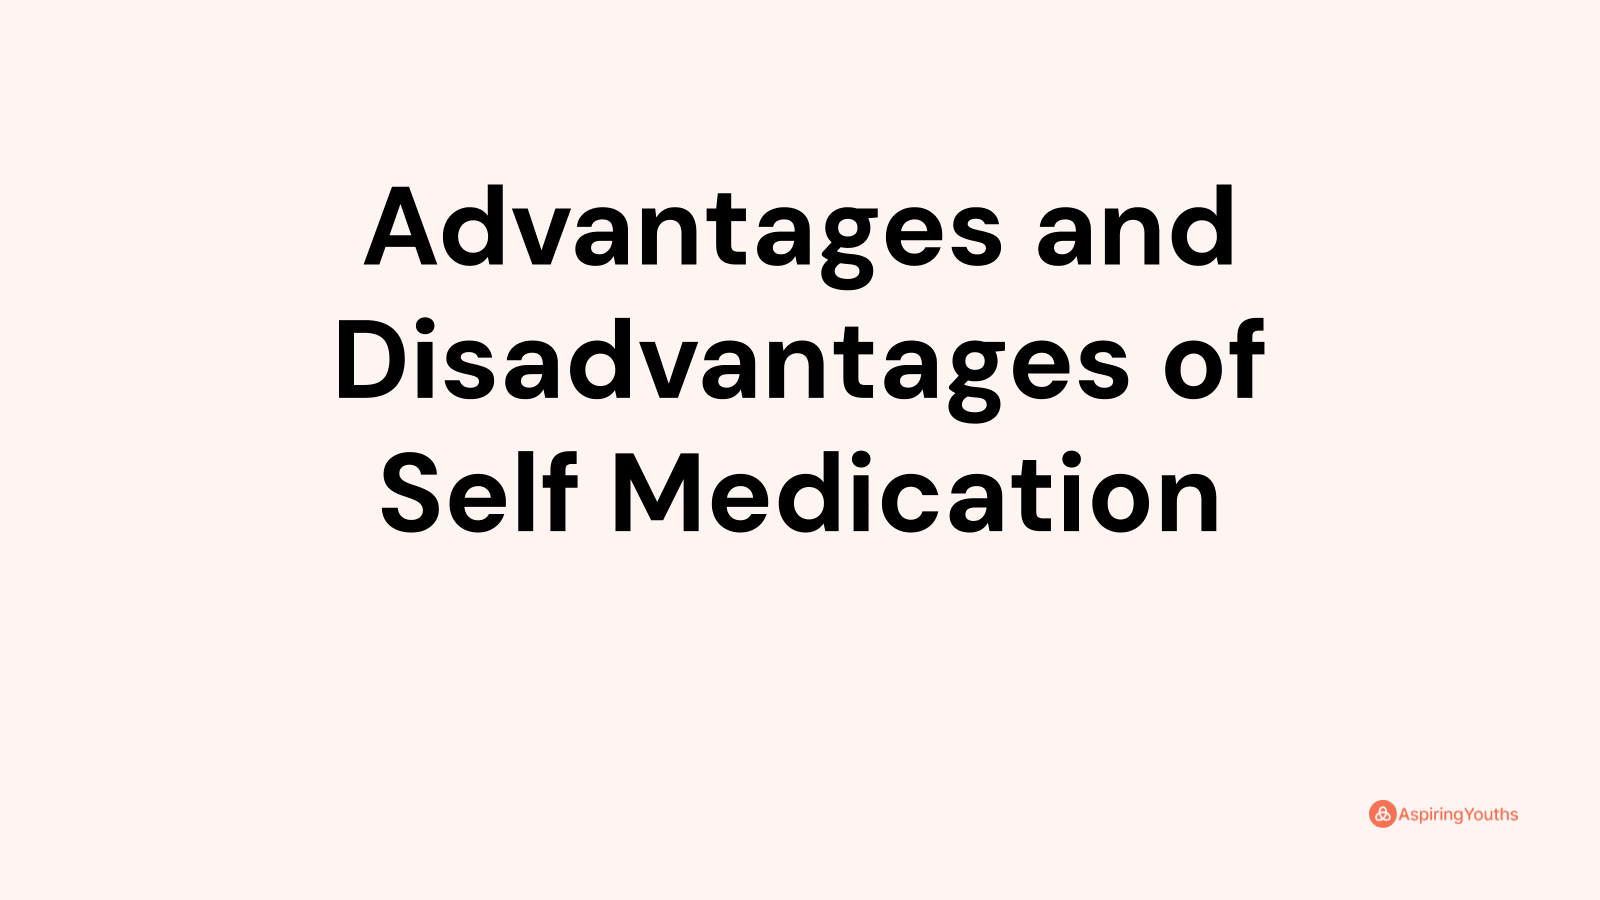 Advantages and disadvantages of Self Medication